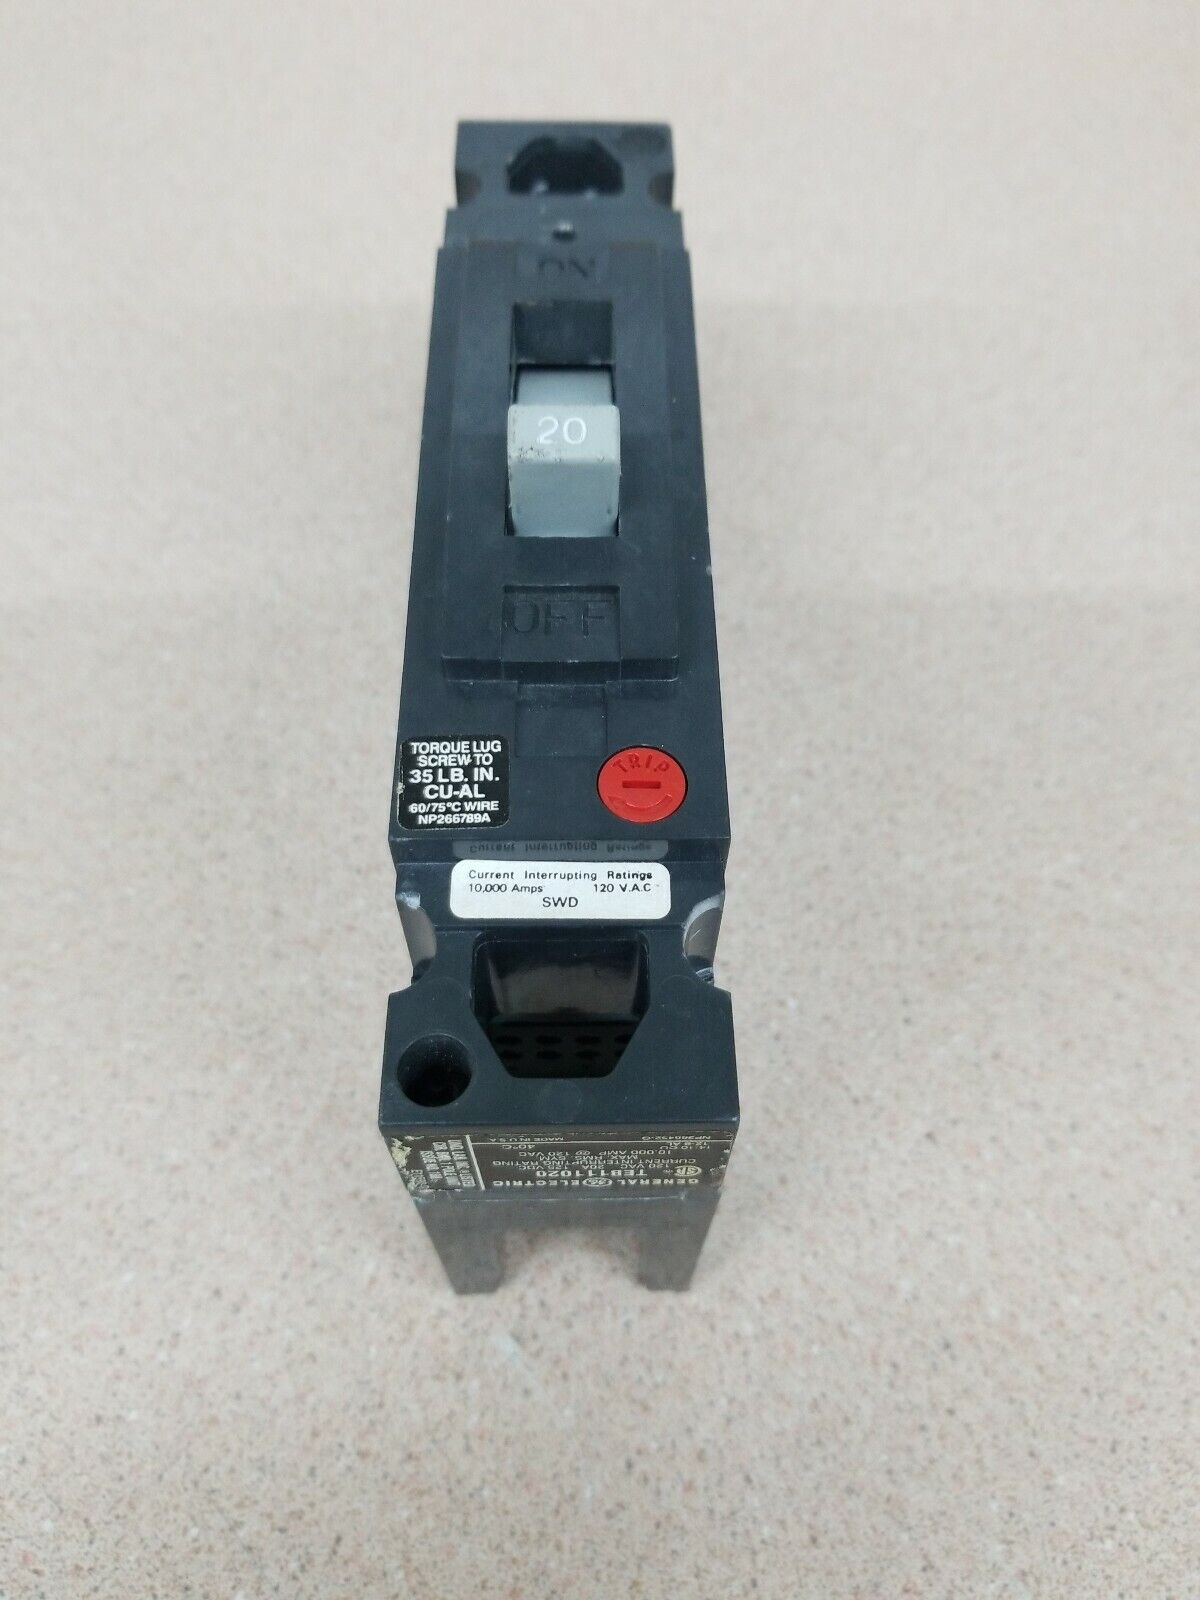 TEB111020 - GE - Molded Case Circuit Breaker